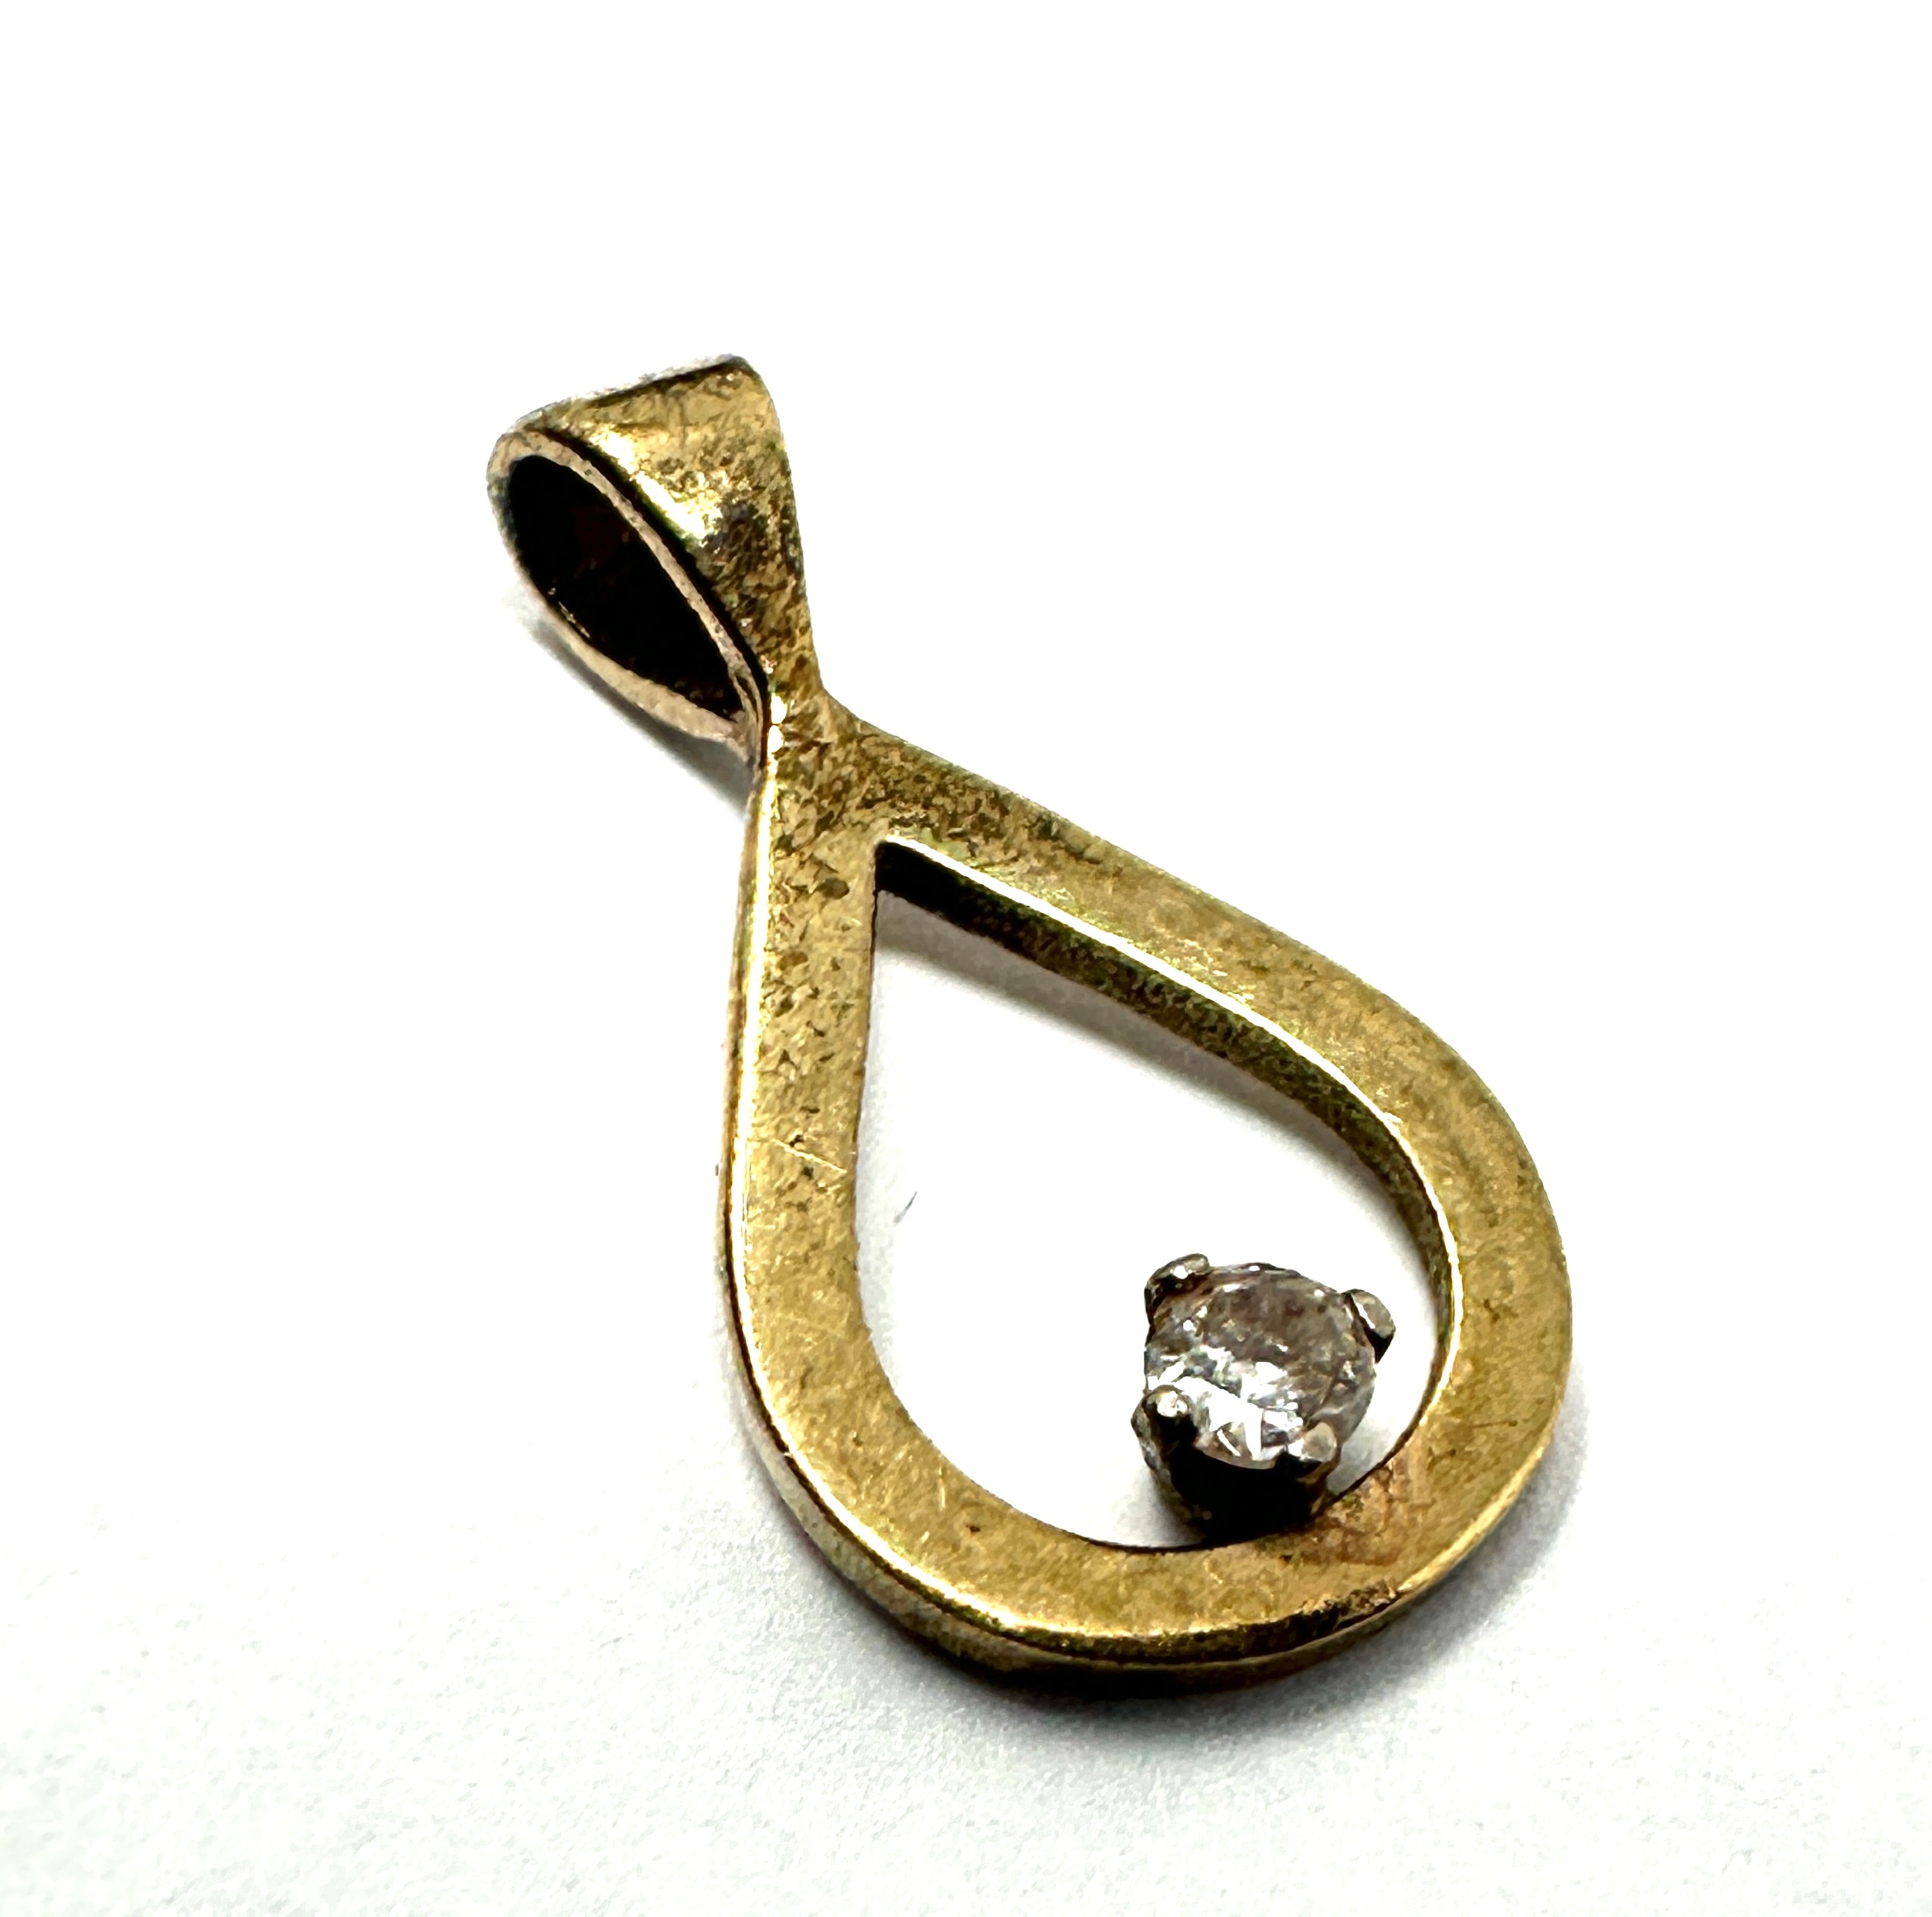 9ct gold diamond pendant weight 0.8g